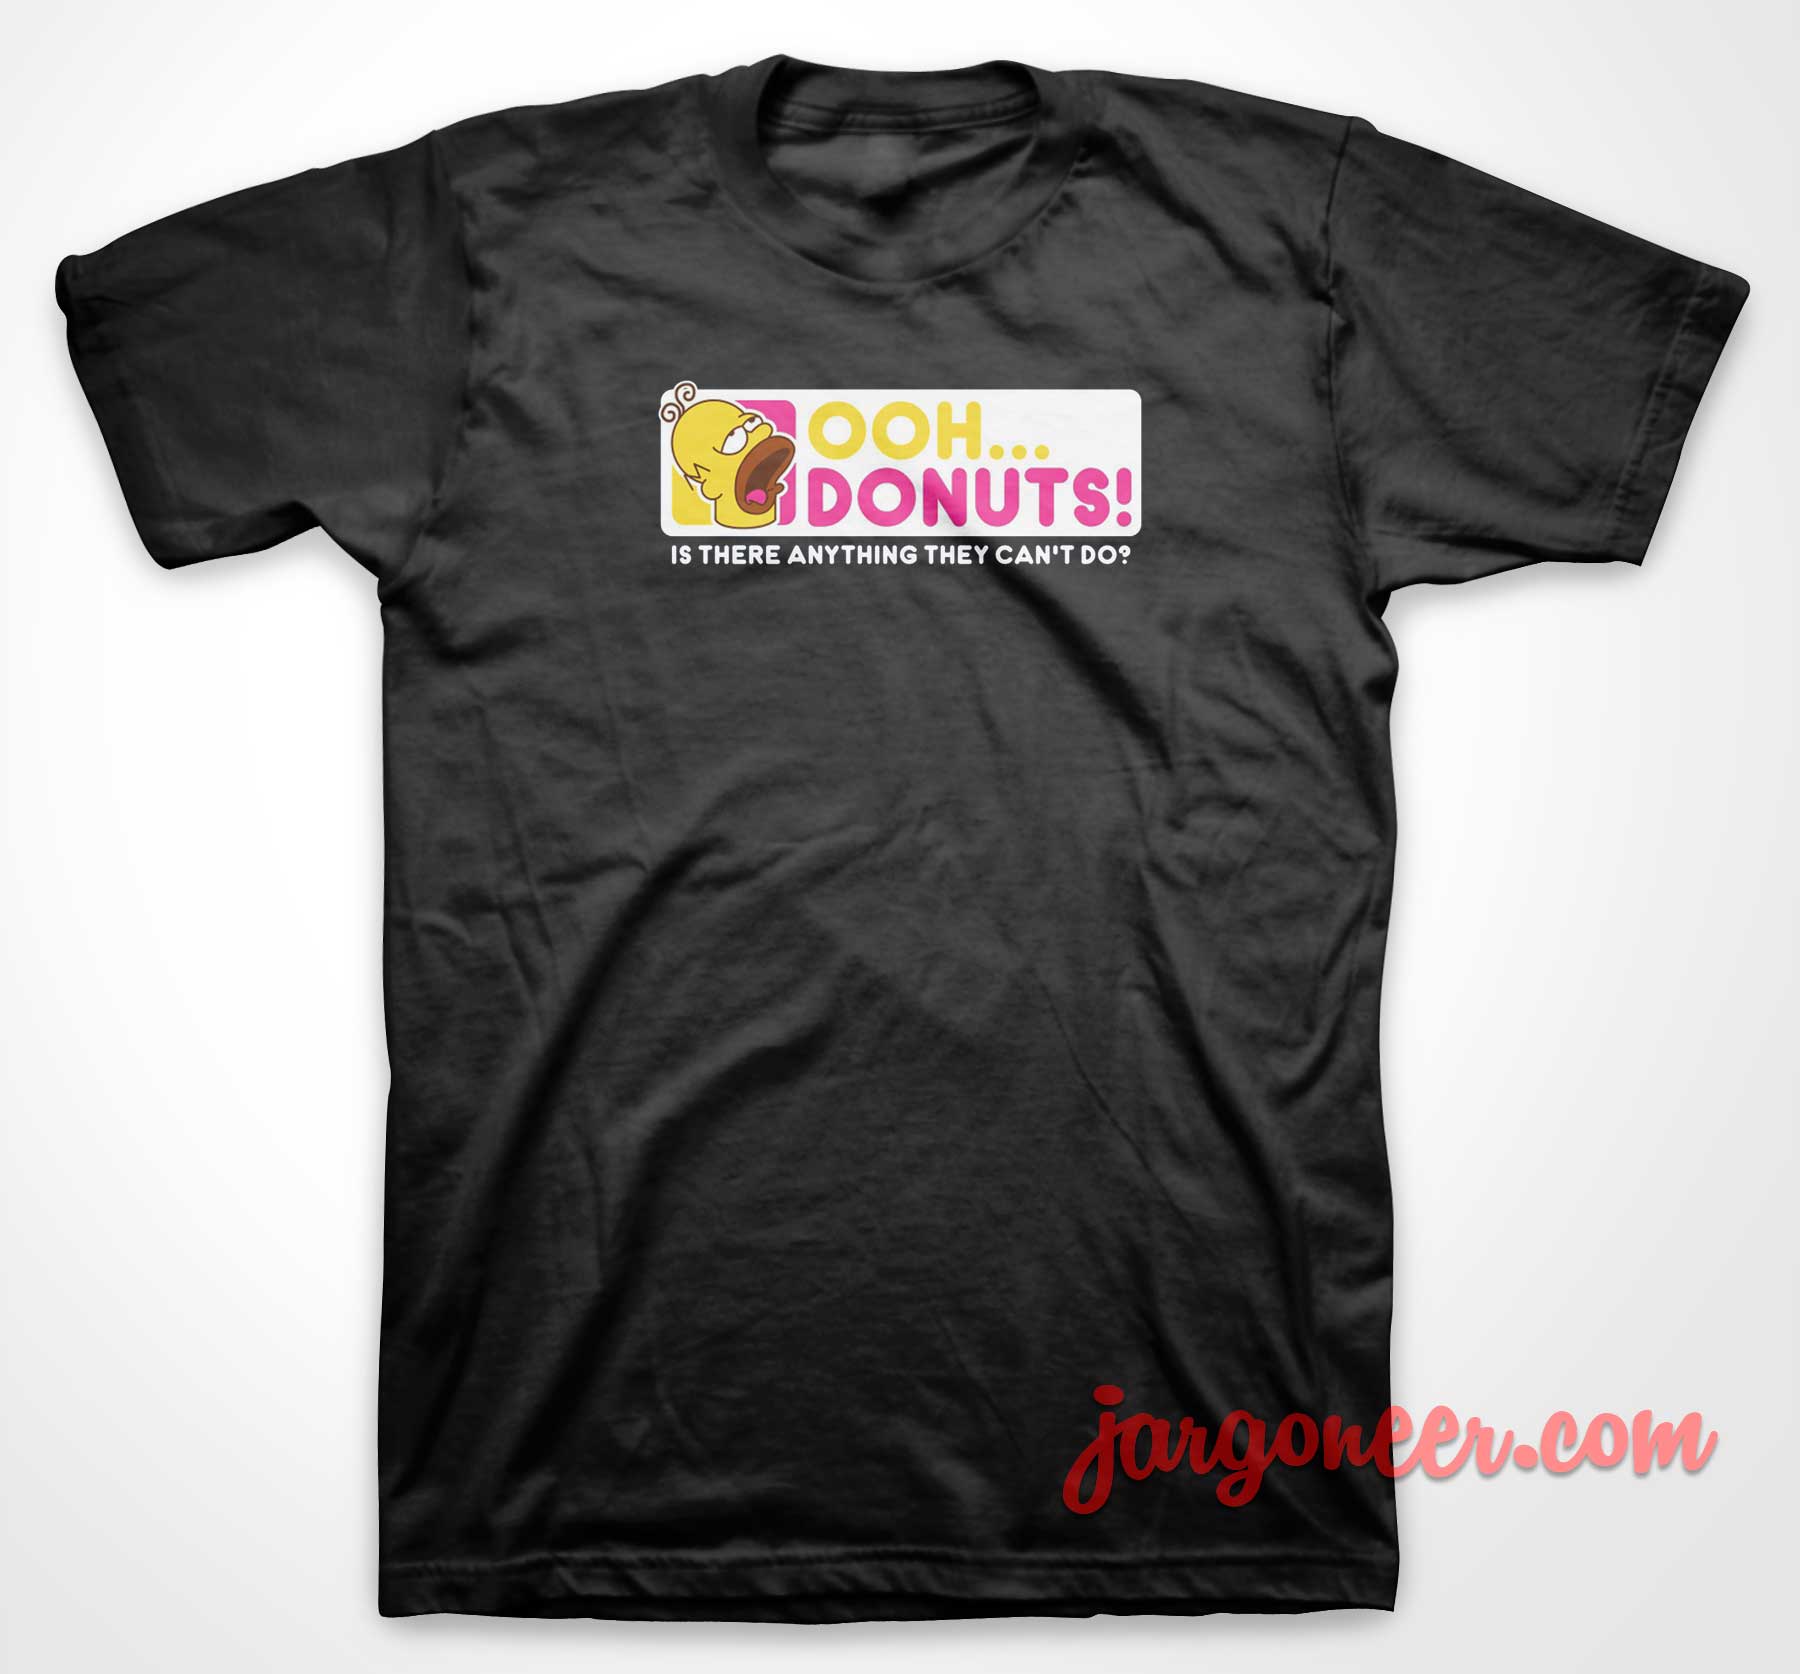 Ooh Donuts - Shop Unique Graphic Cool Shirt Designs